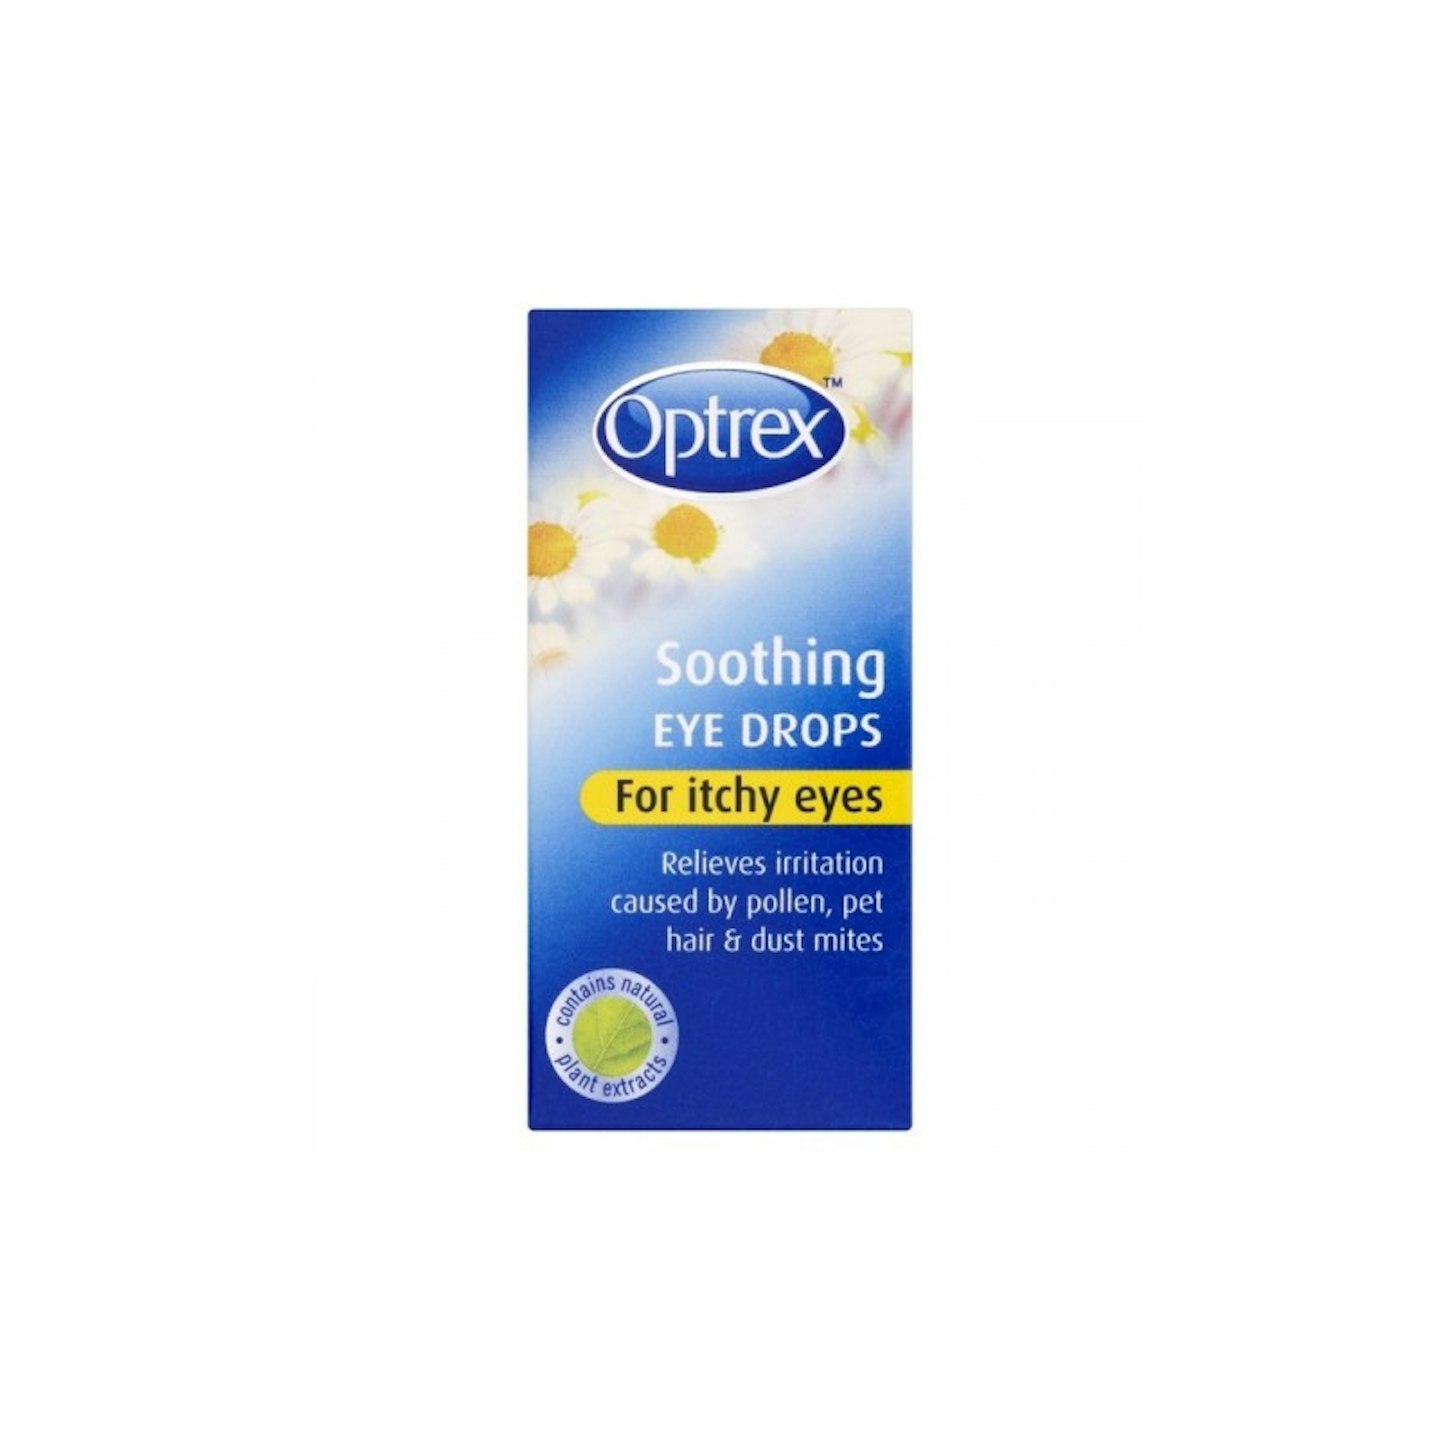 Optrex Soothing Eye Drops, £4.29